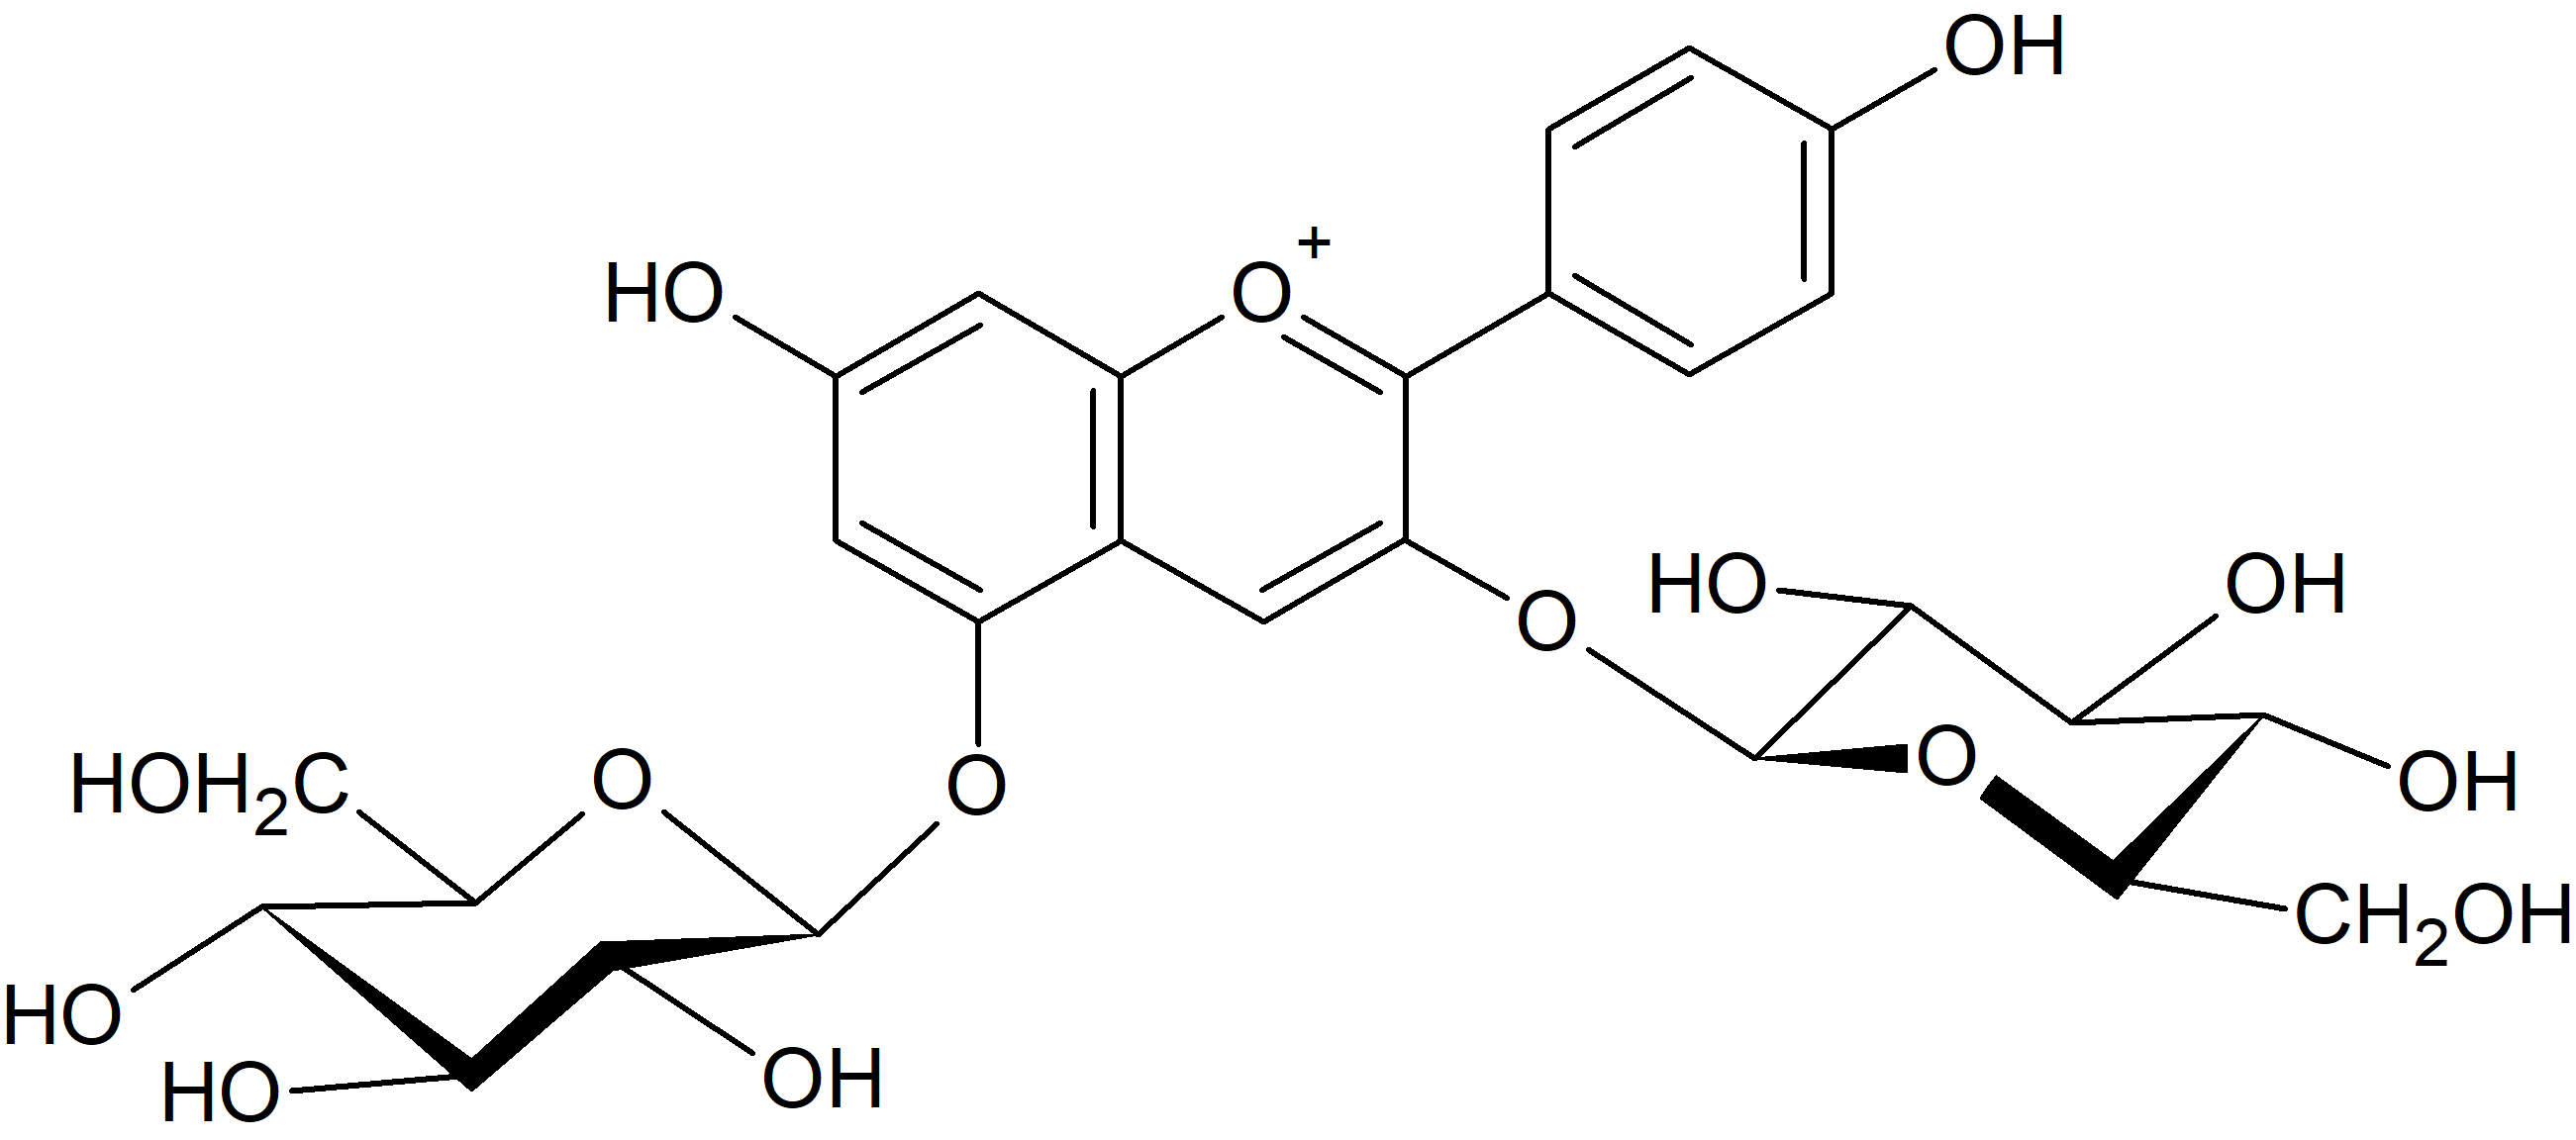 Pelargonidin 3,5-di-O-glucoside